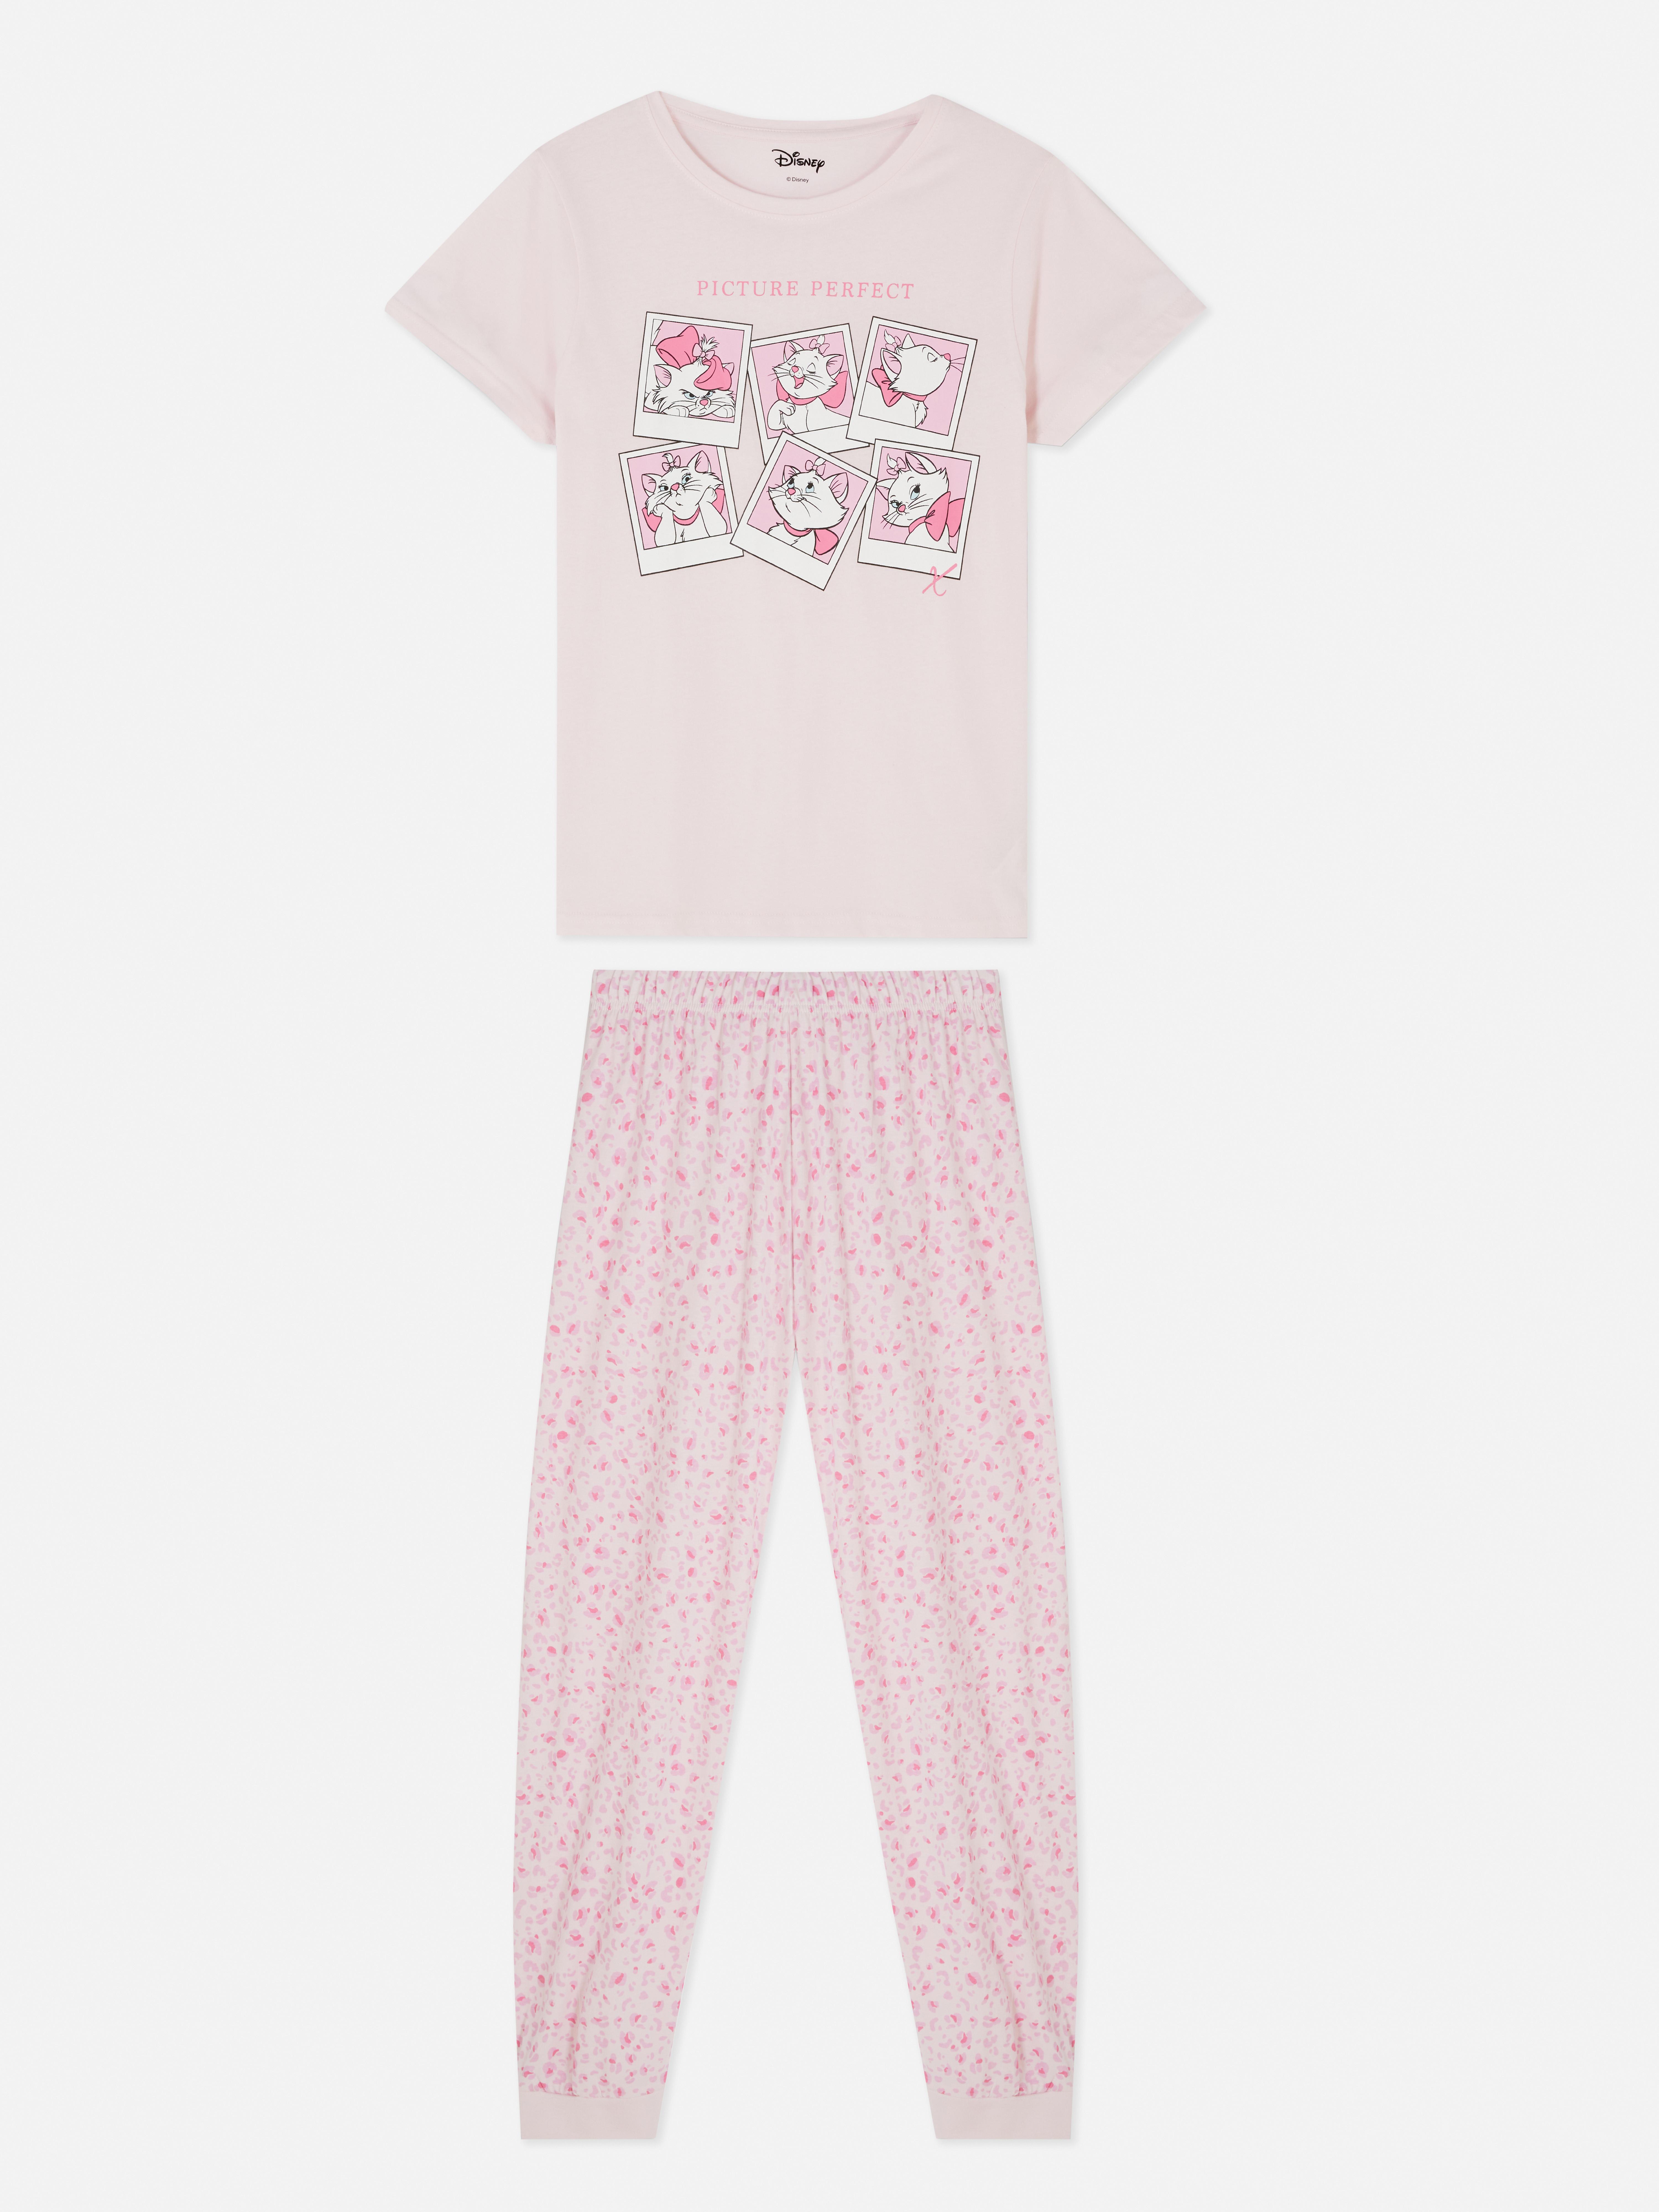 Disney's Printed Pyjama Set